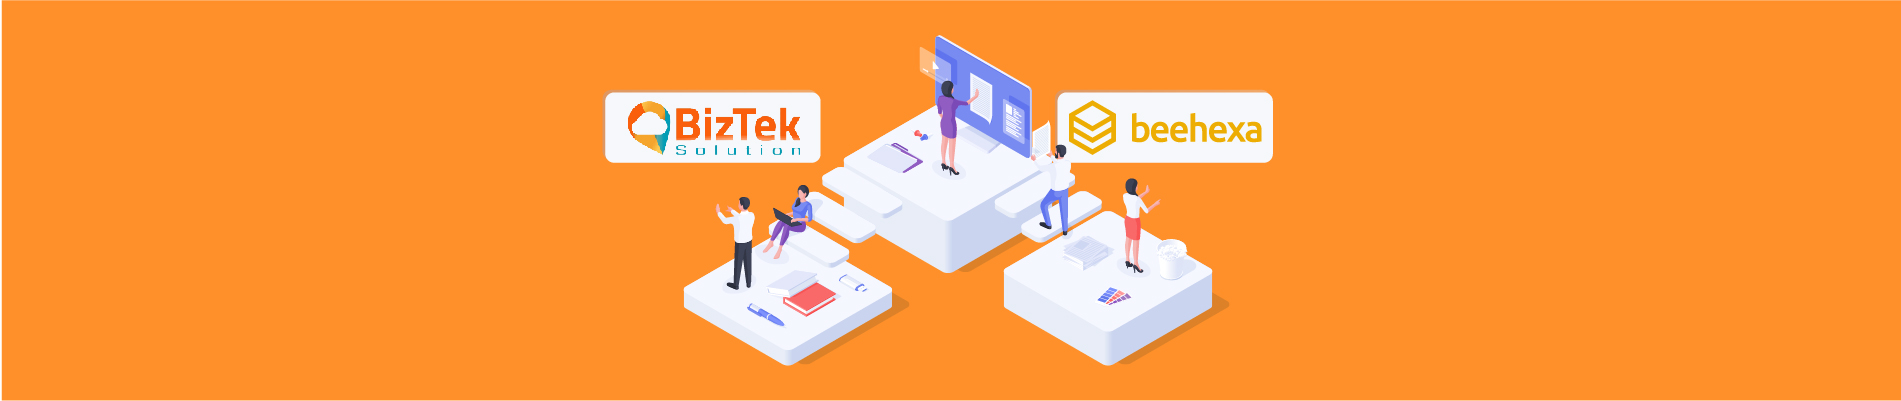 BizTek and Beehexa Partnership Announcement